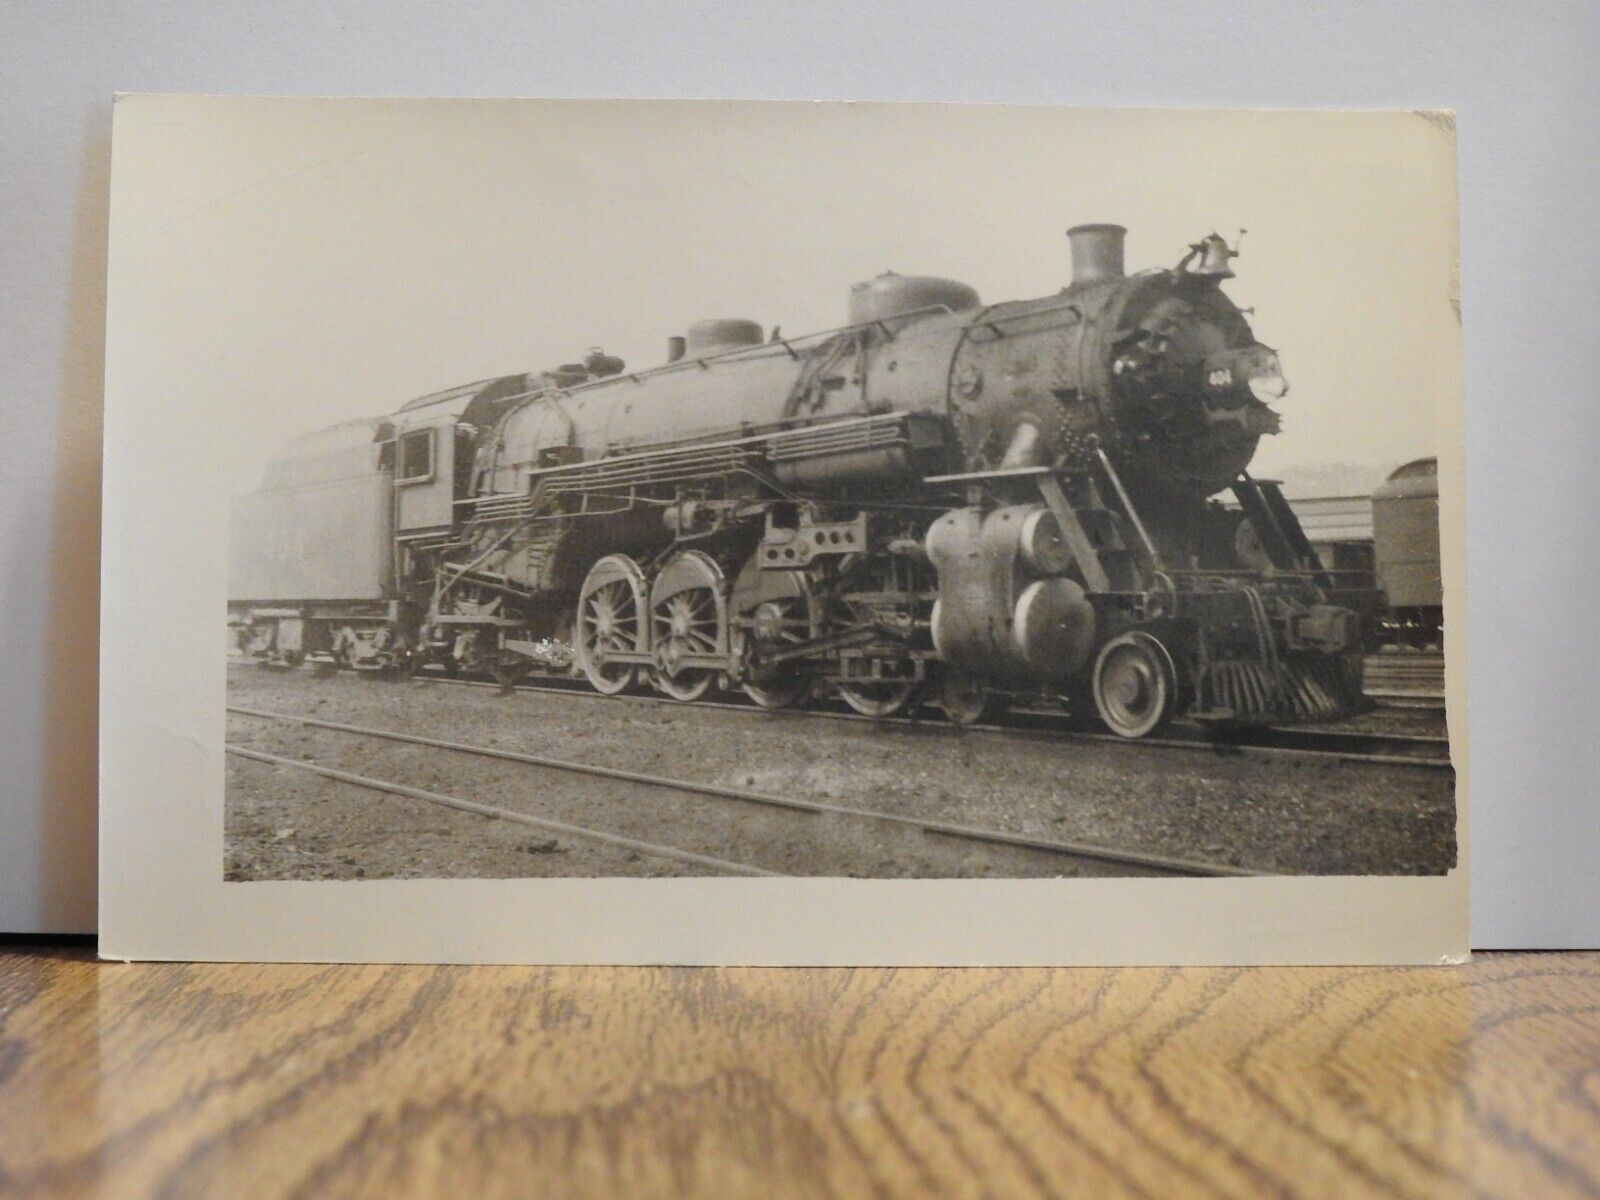 L & N Locomotive # 404 Cincinnati, Ohio RPPC 7/13/1934 Real Photo Post Card